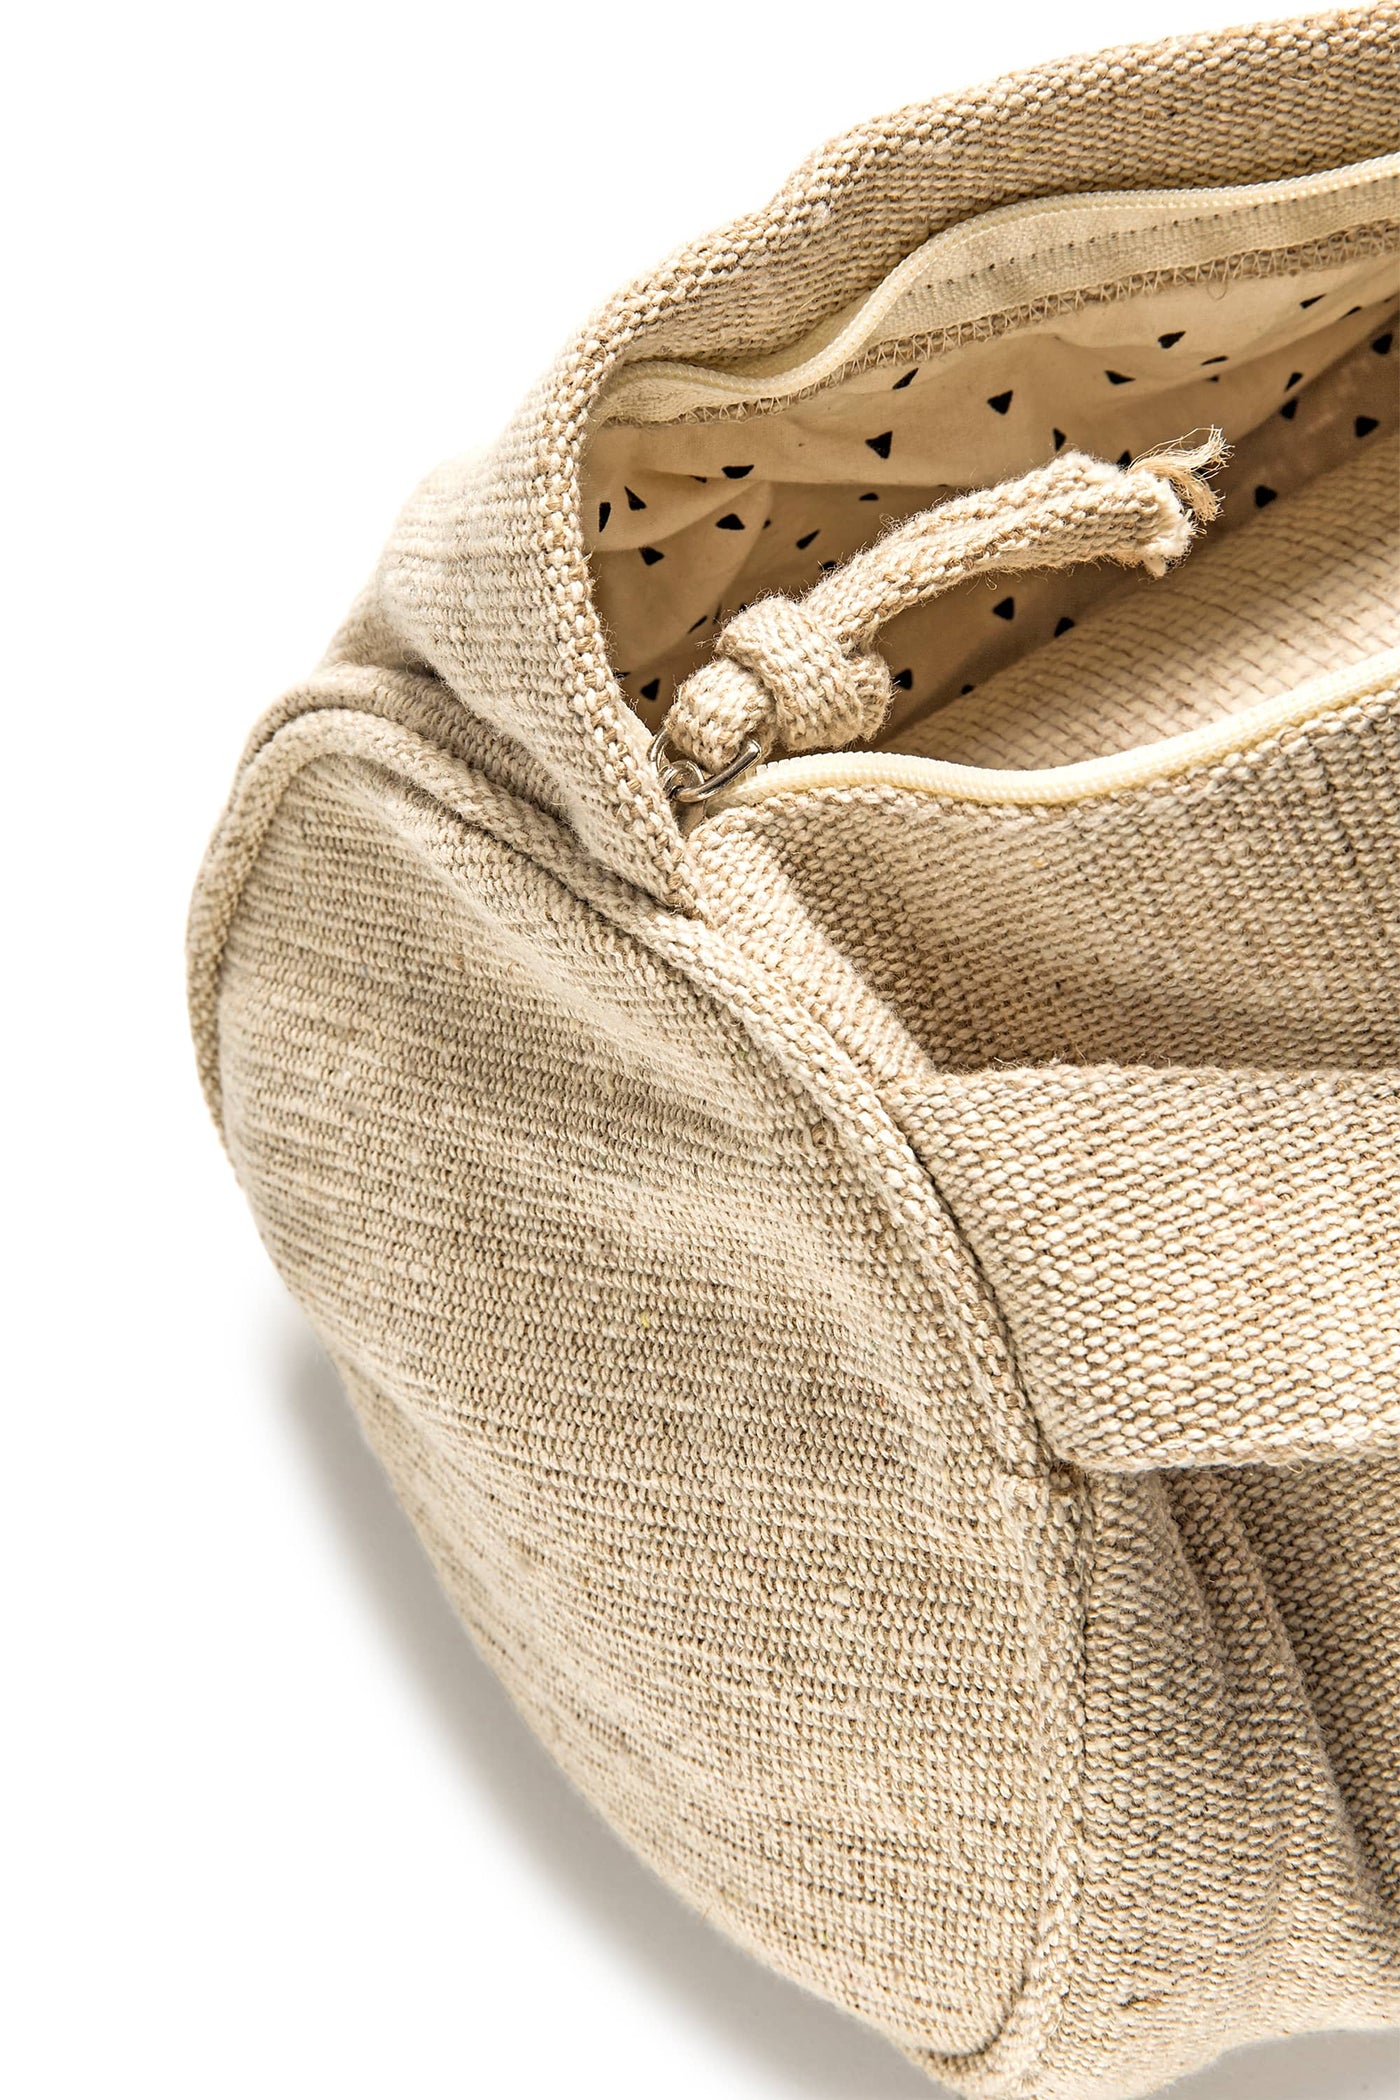 Premium Yoga Mat Bag, Yoga Bag With Zipper, Inner Pocket Mindful Jungle  montserrat Leaf Print -  Canada